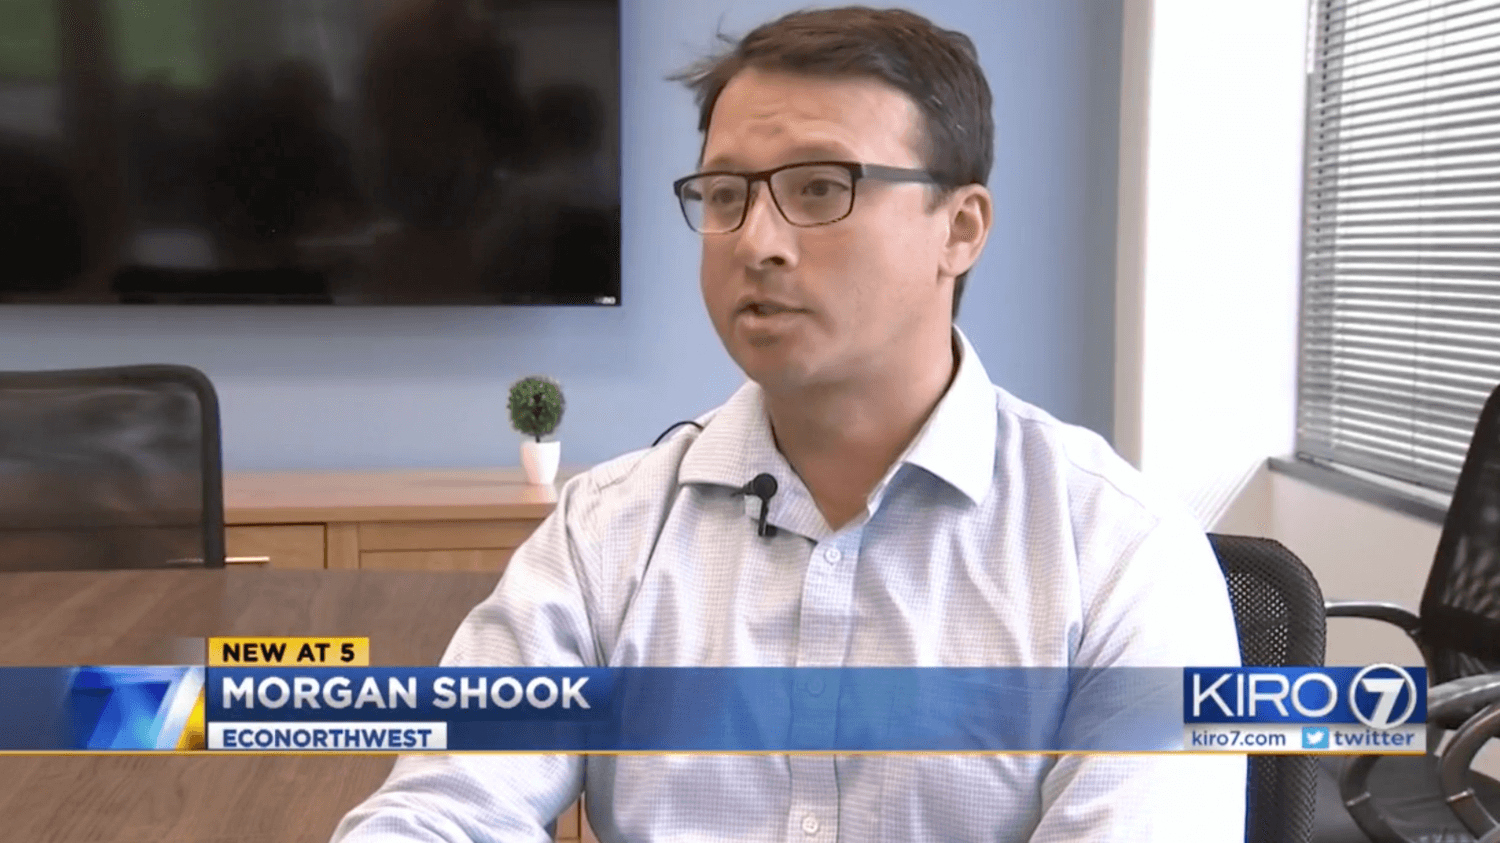 Morgan Shook on KIRO TV discussing Employee Head Tax